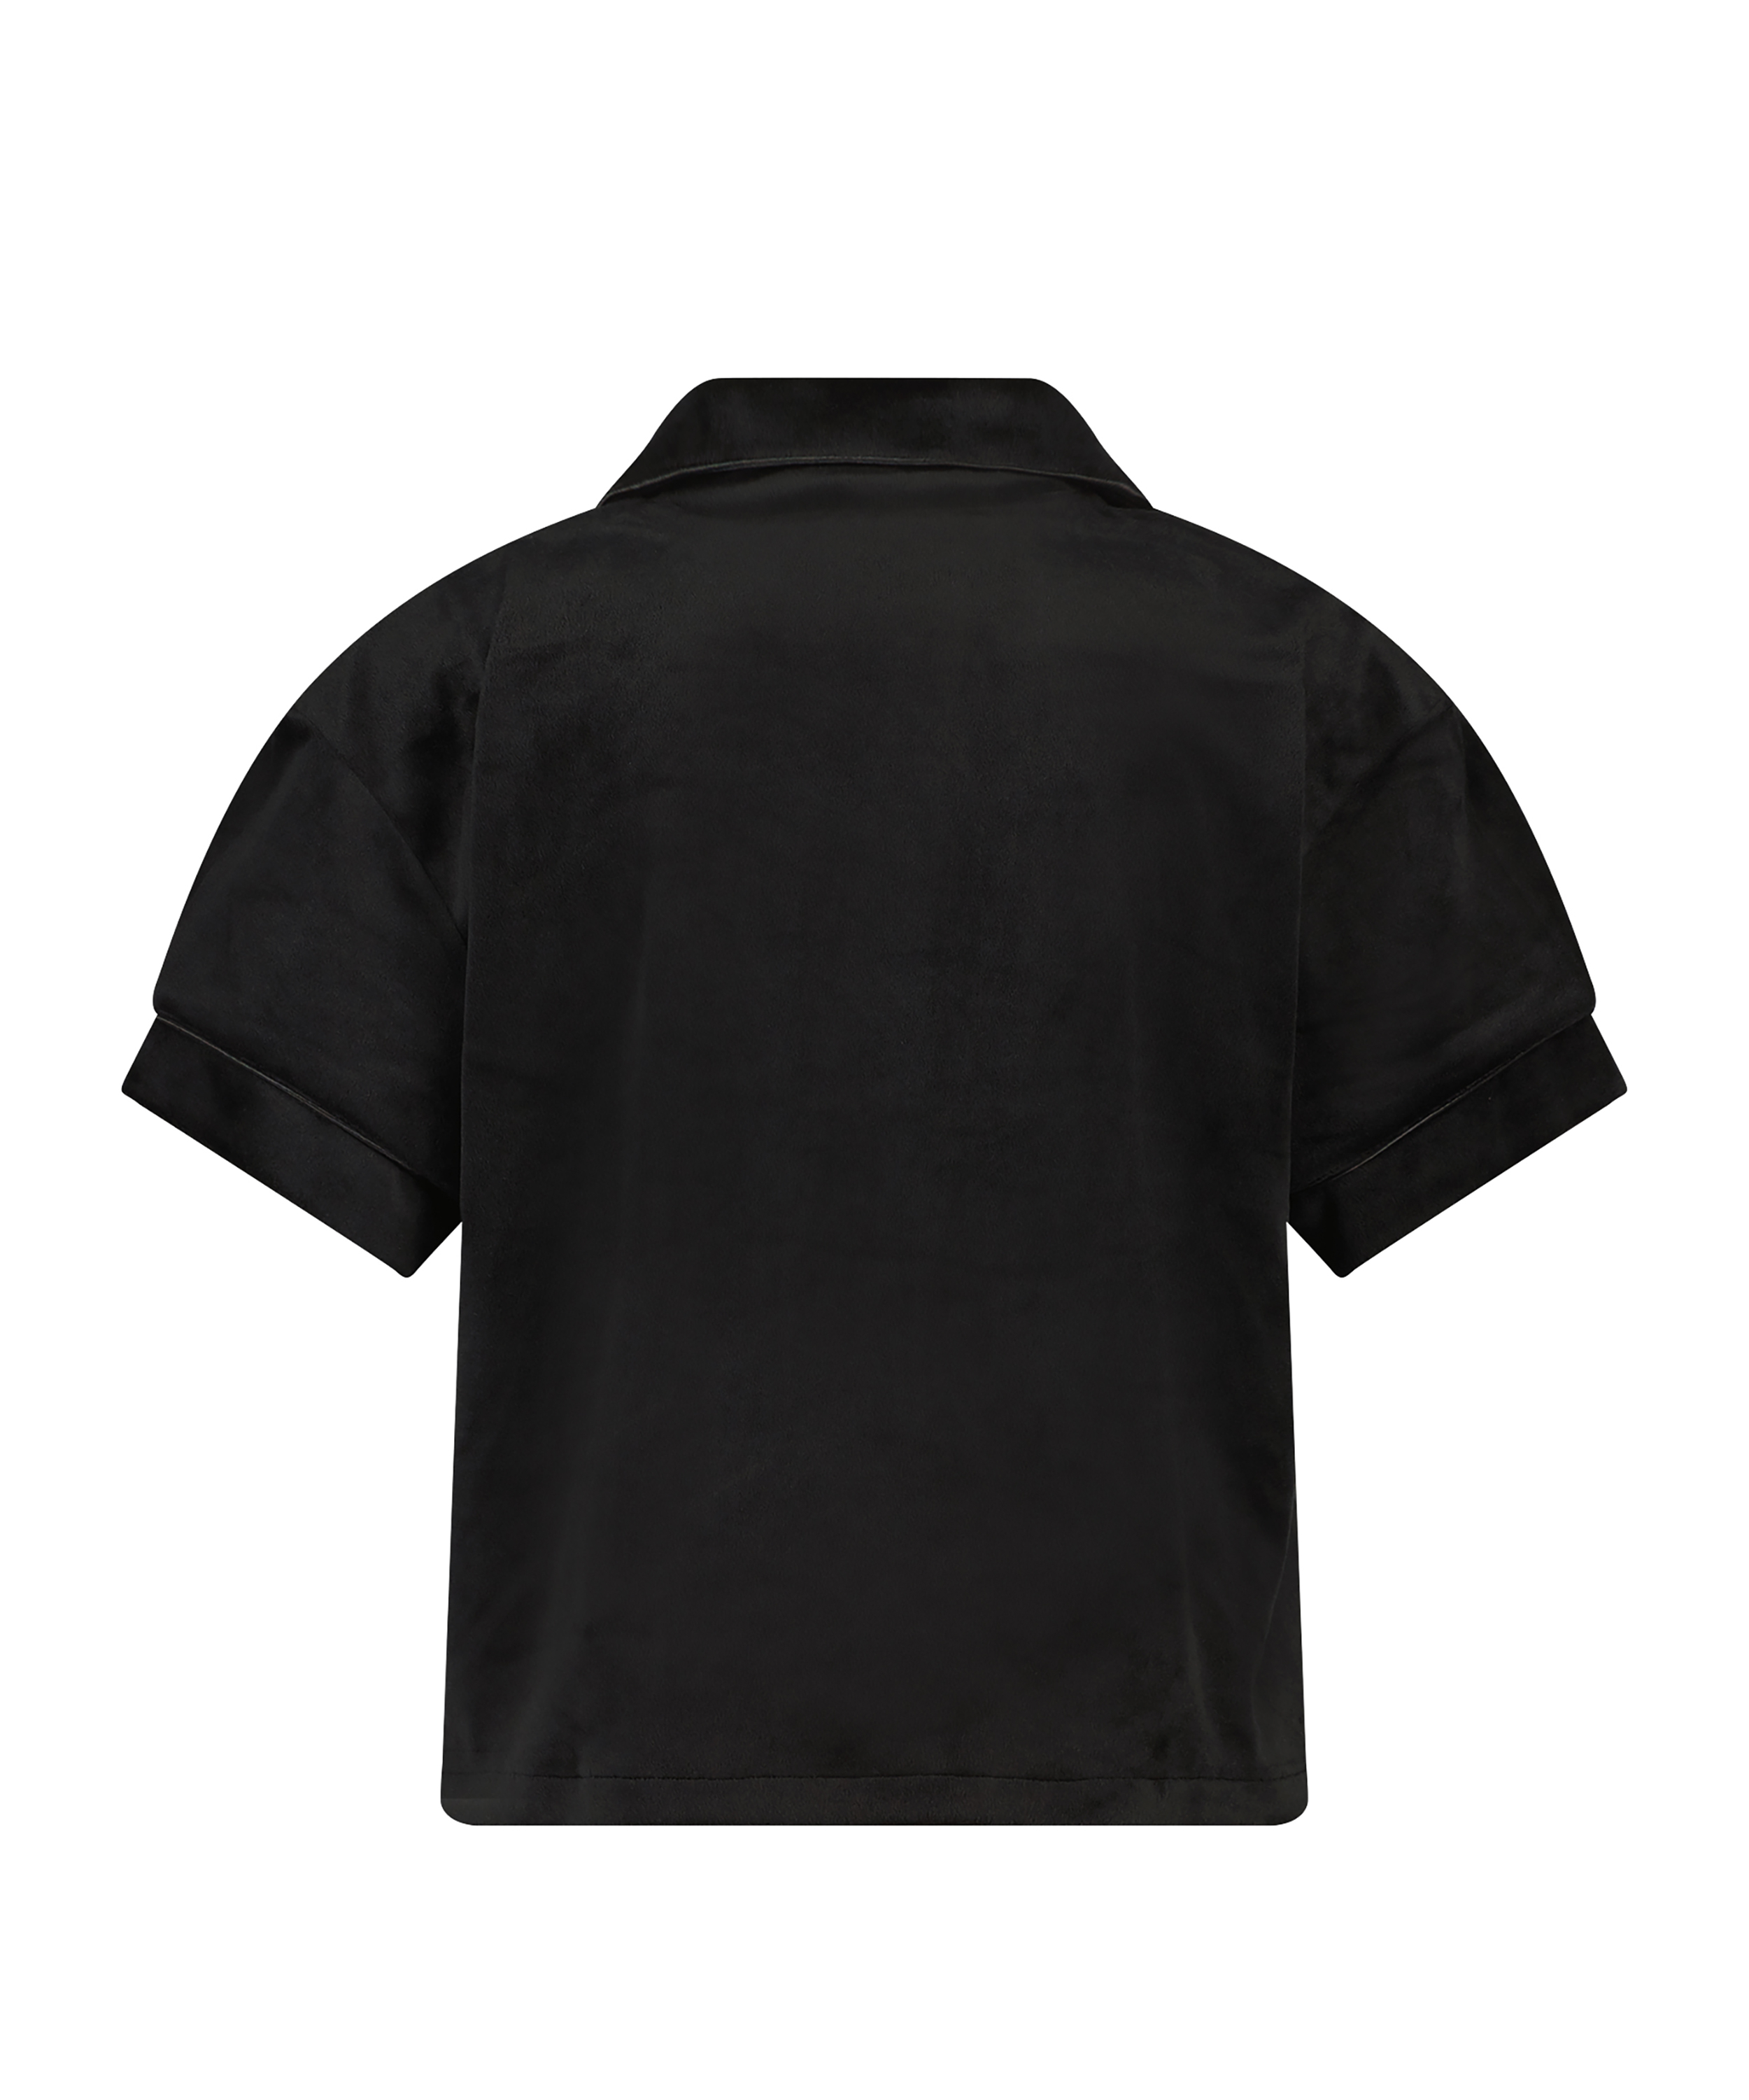 Short Sleeve Velour Jacket, Black, main